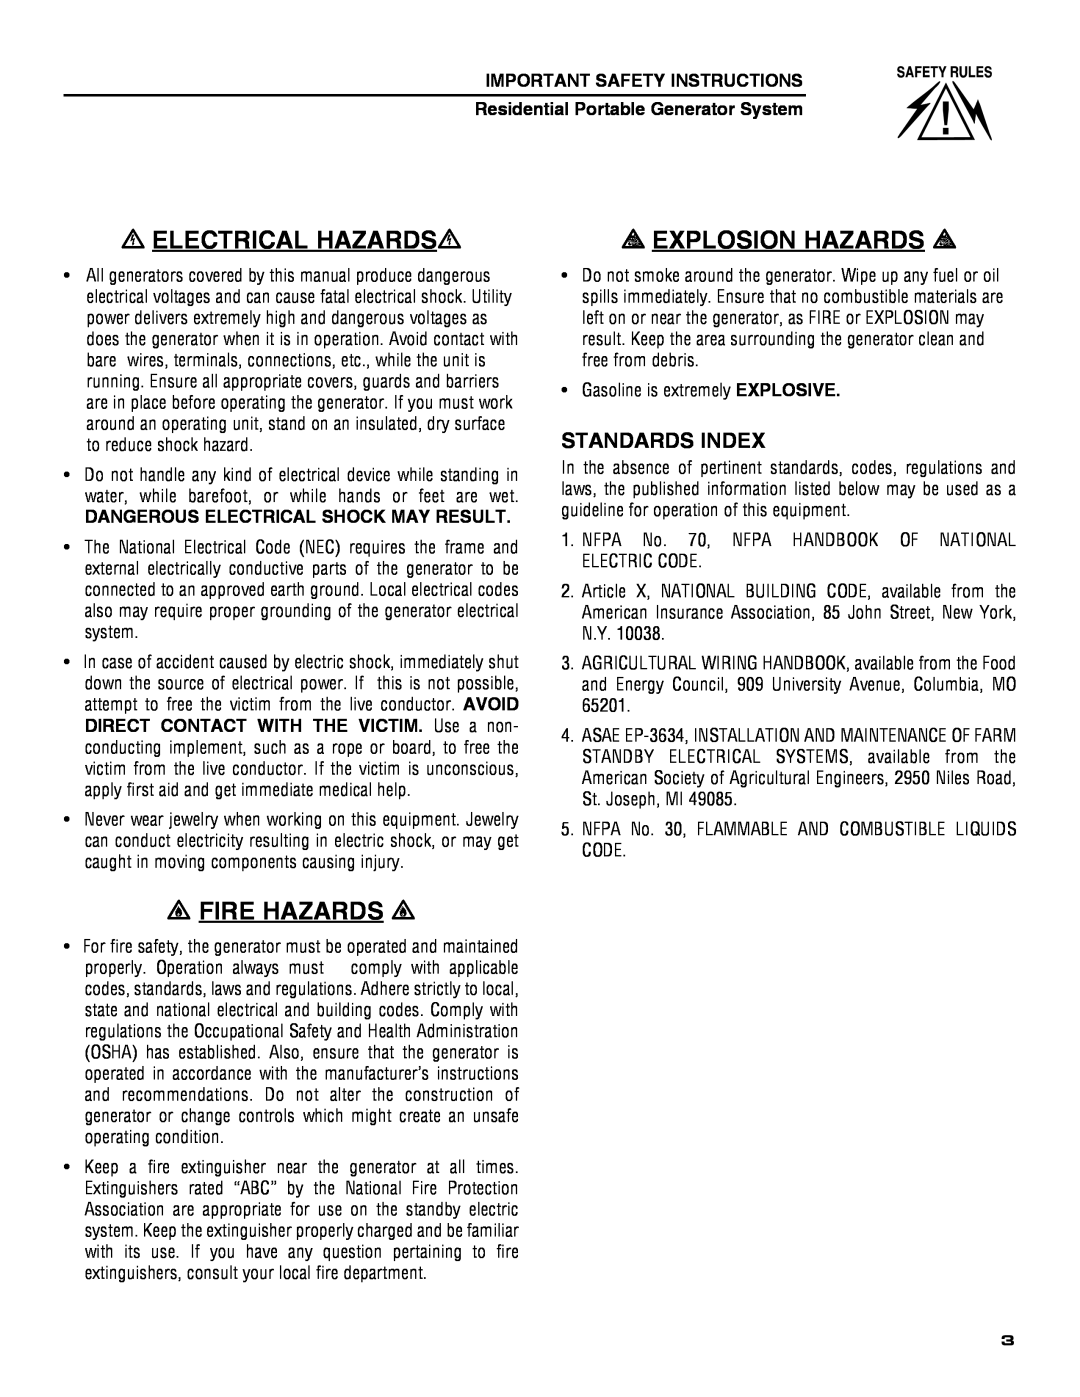 Guardian Technologies 5209 owner manual Electrical Hazards, Explosion Hazards, Fire Hazards, Standards Index 